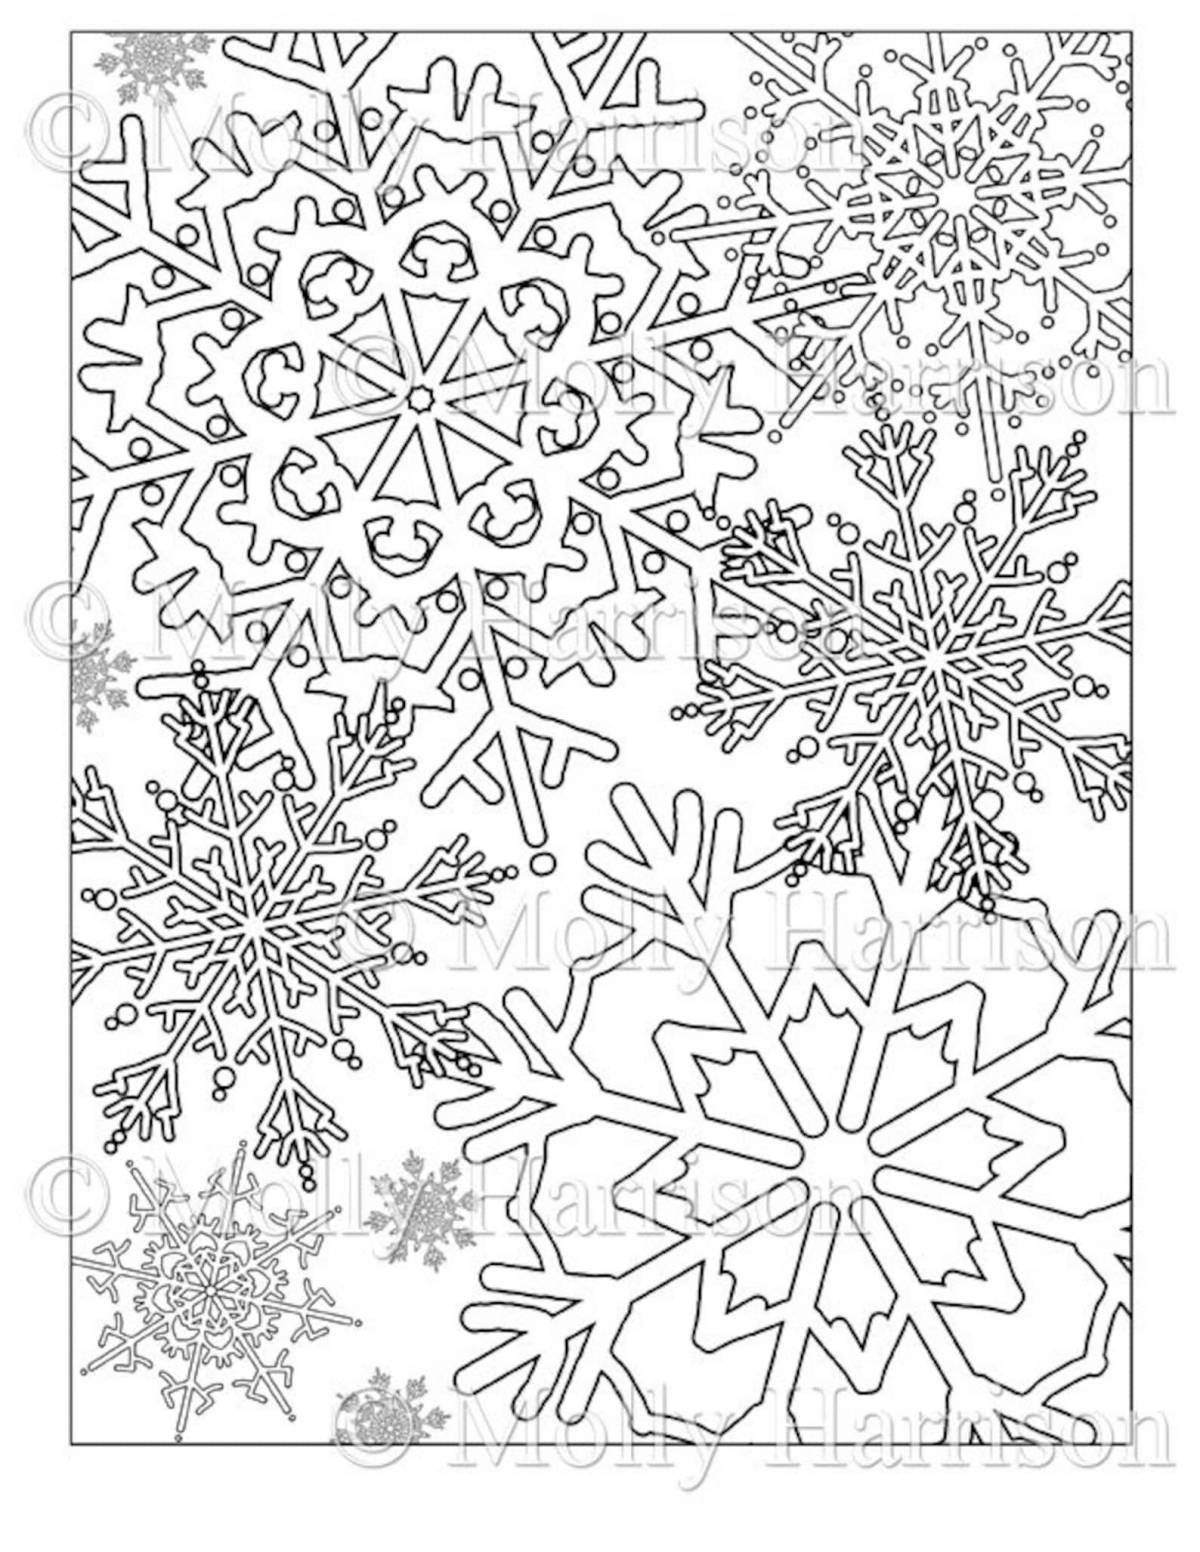 Fancy coloring frosty patterns